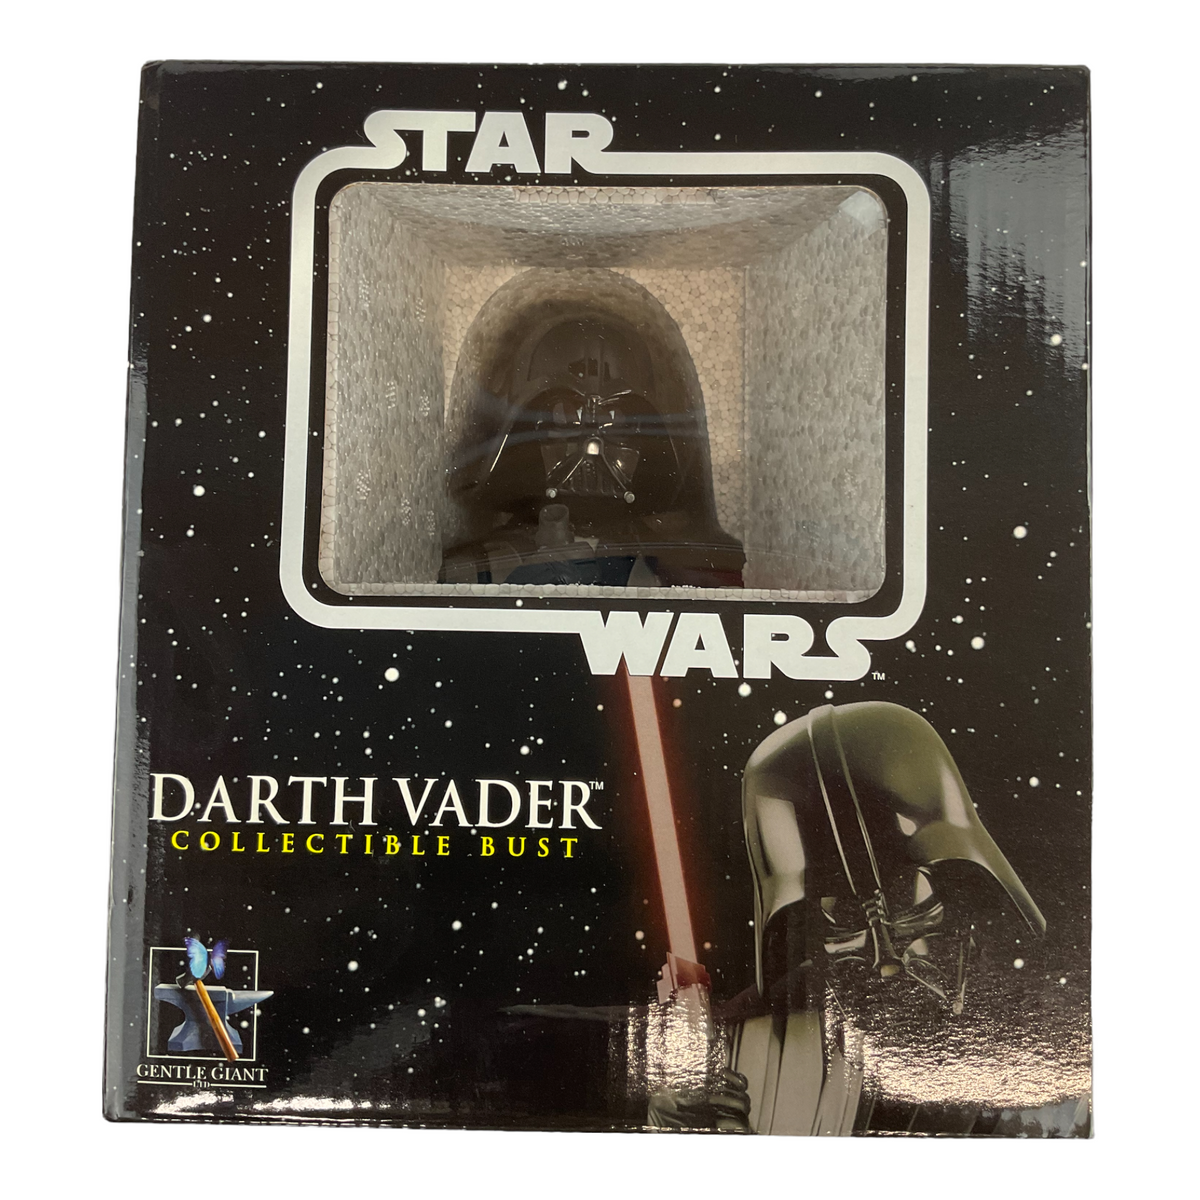 Star Wars Episode III Darth Vader Mini Bust